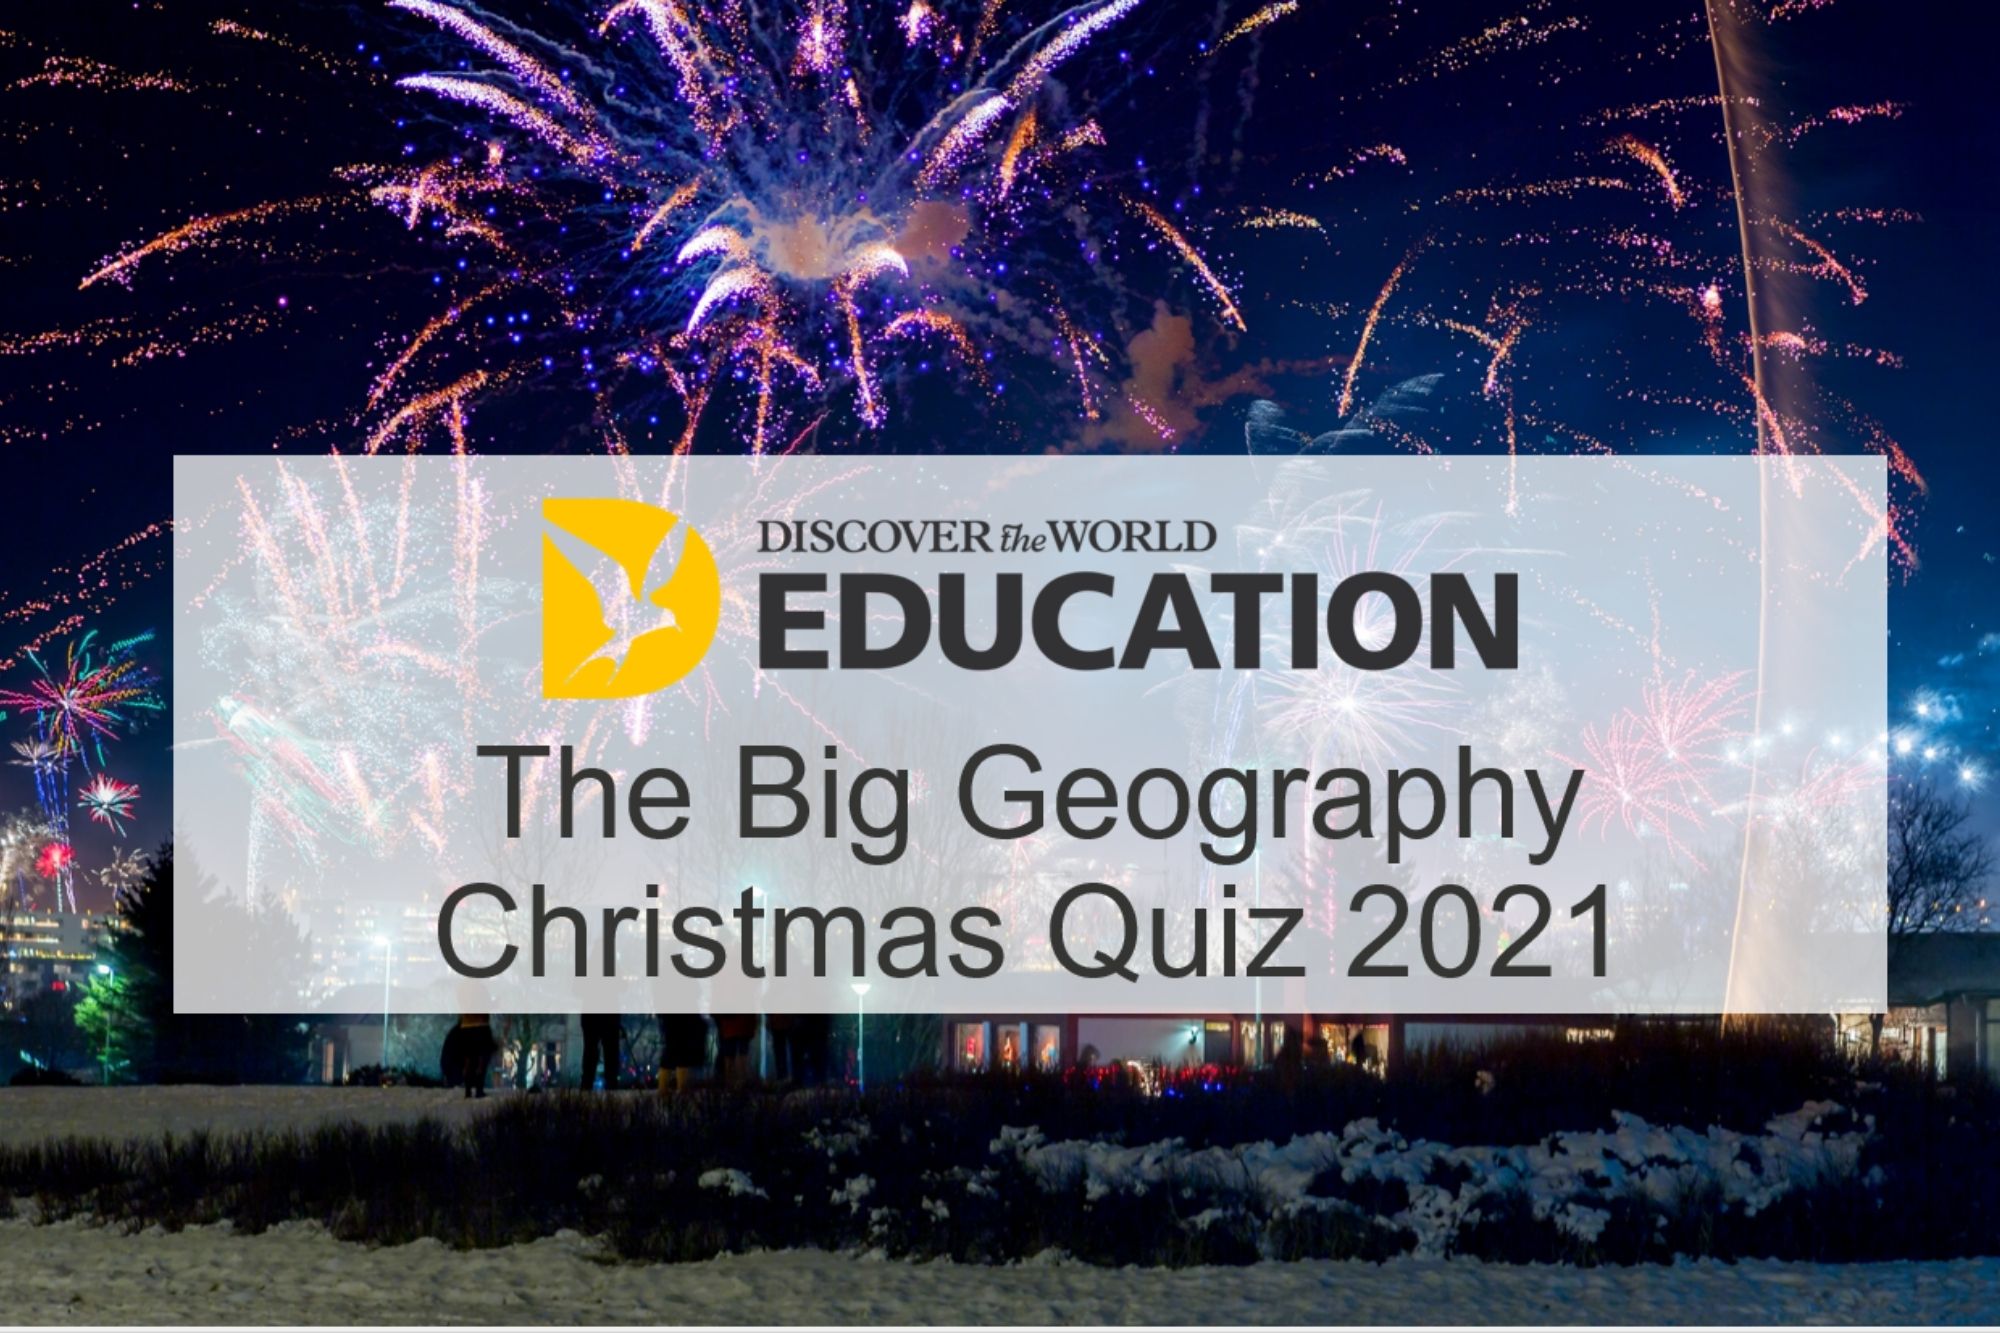 The Big Geography Christmas Quiz 2021